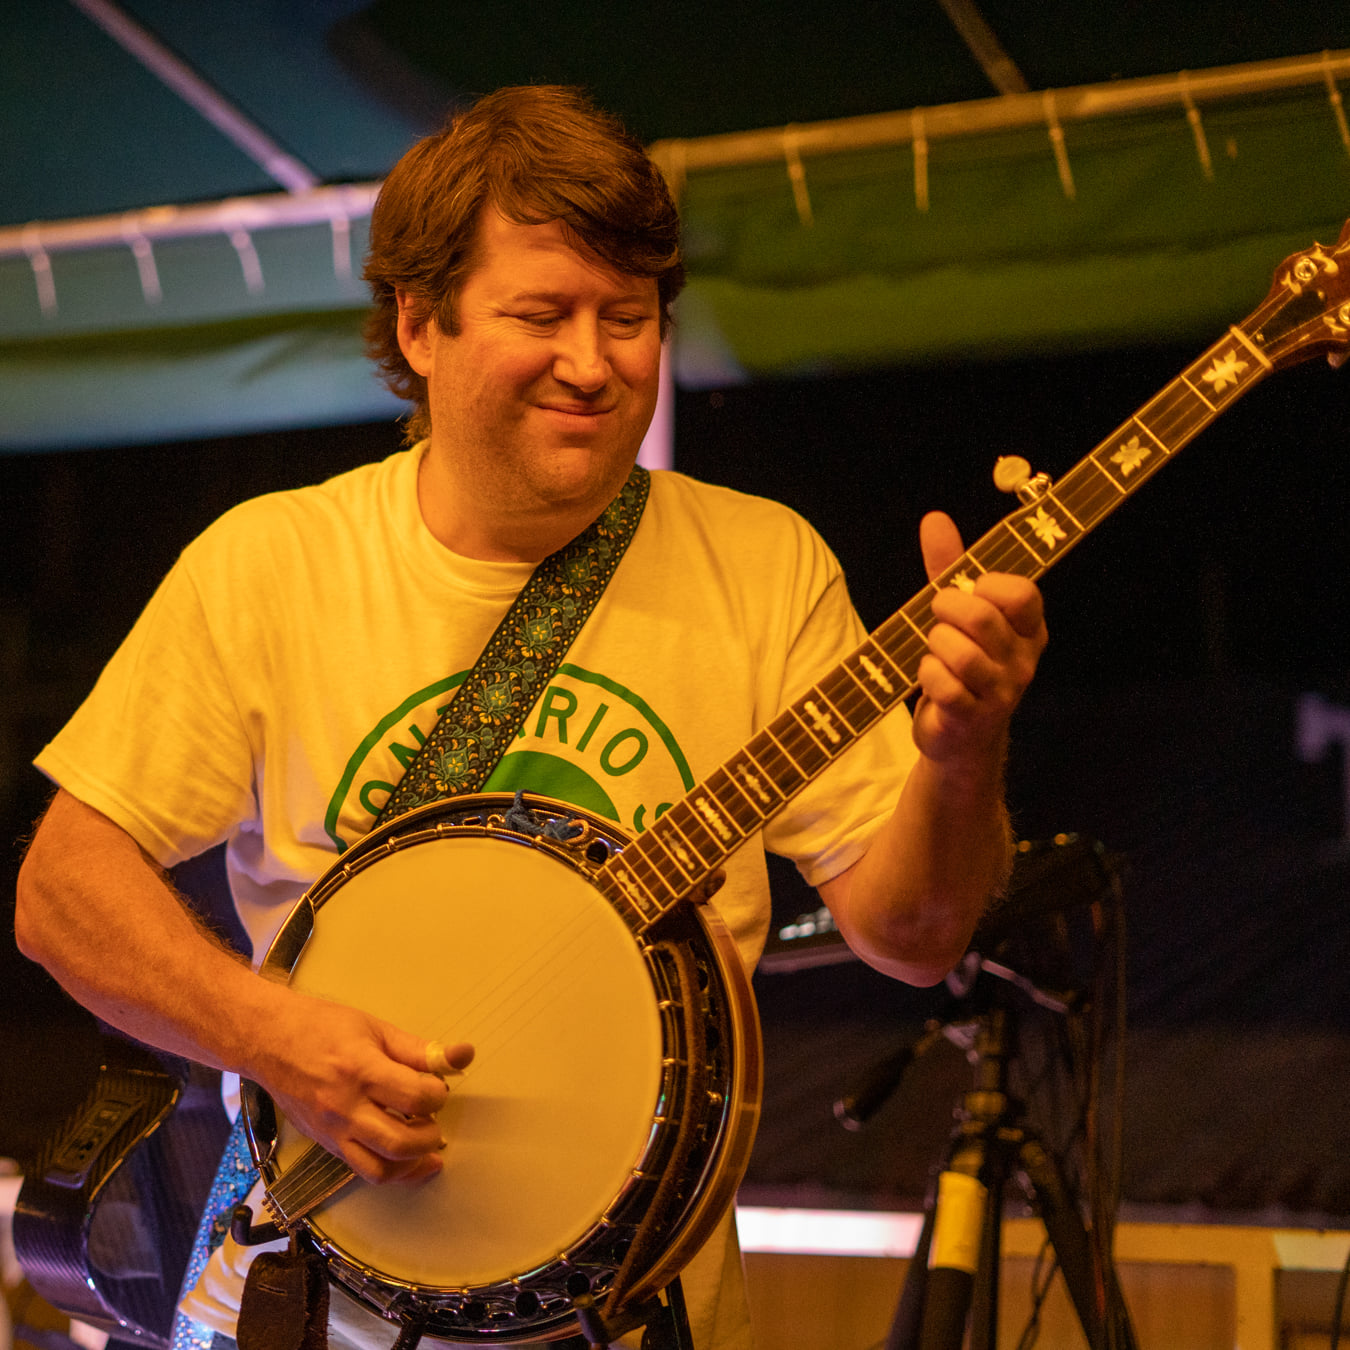 Brian Tomaszewski playing the banjo